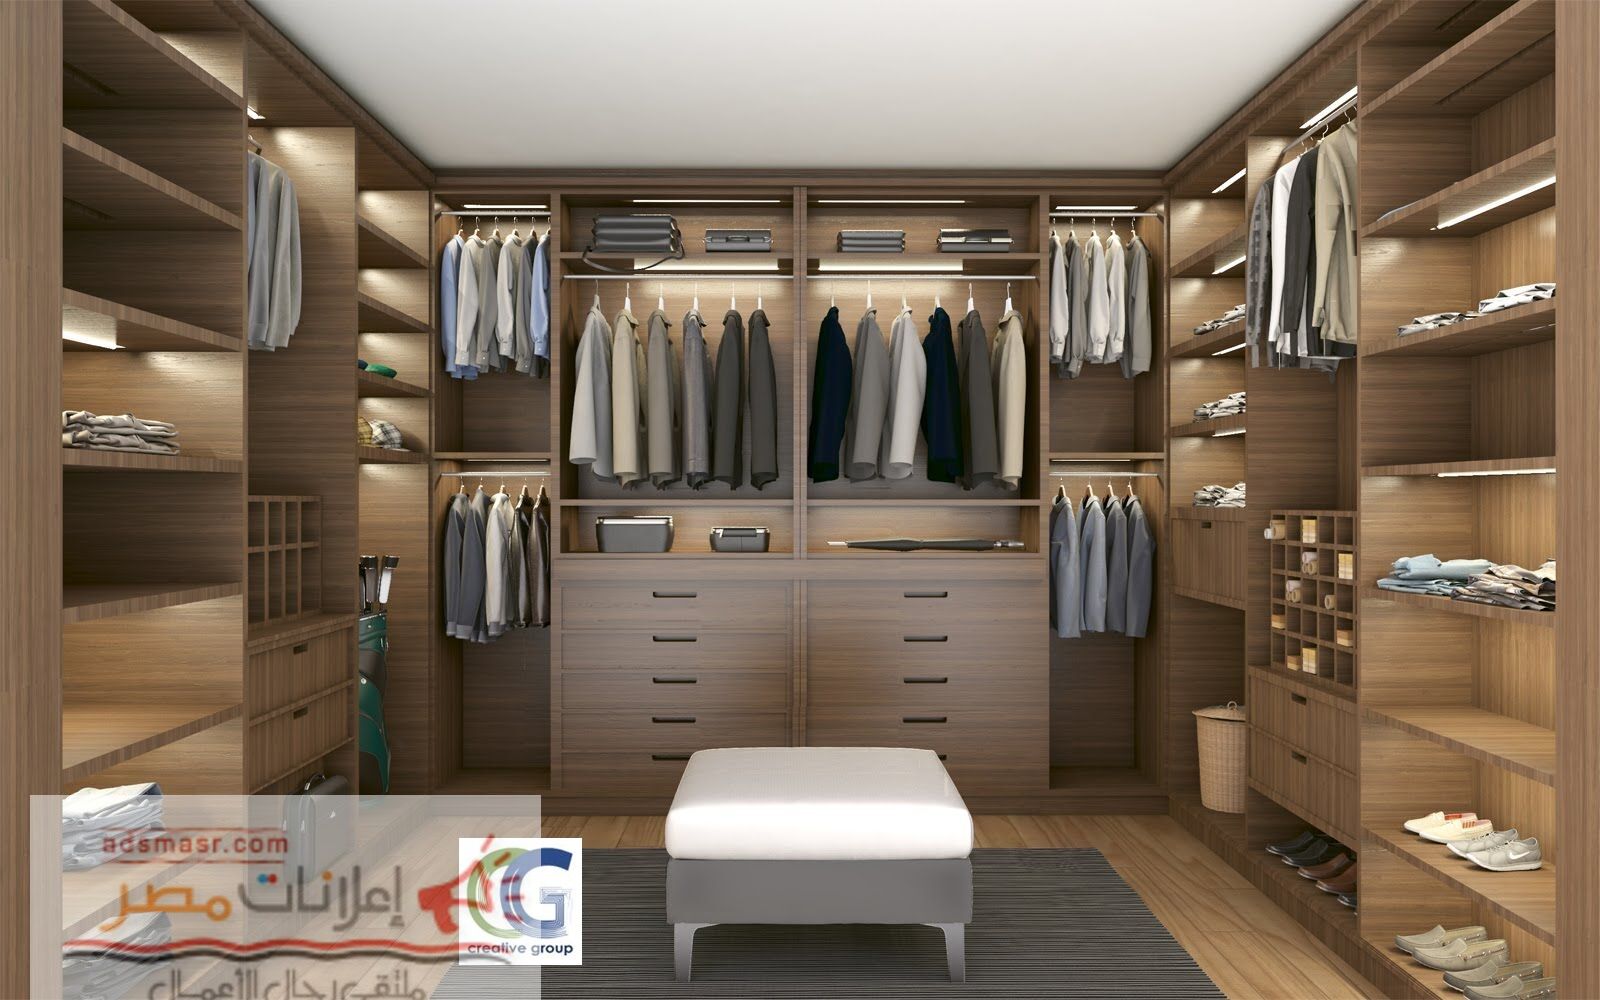 غرف ملابس مودرن- شركة كرياتف جروب 01203903309